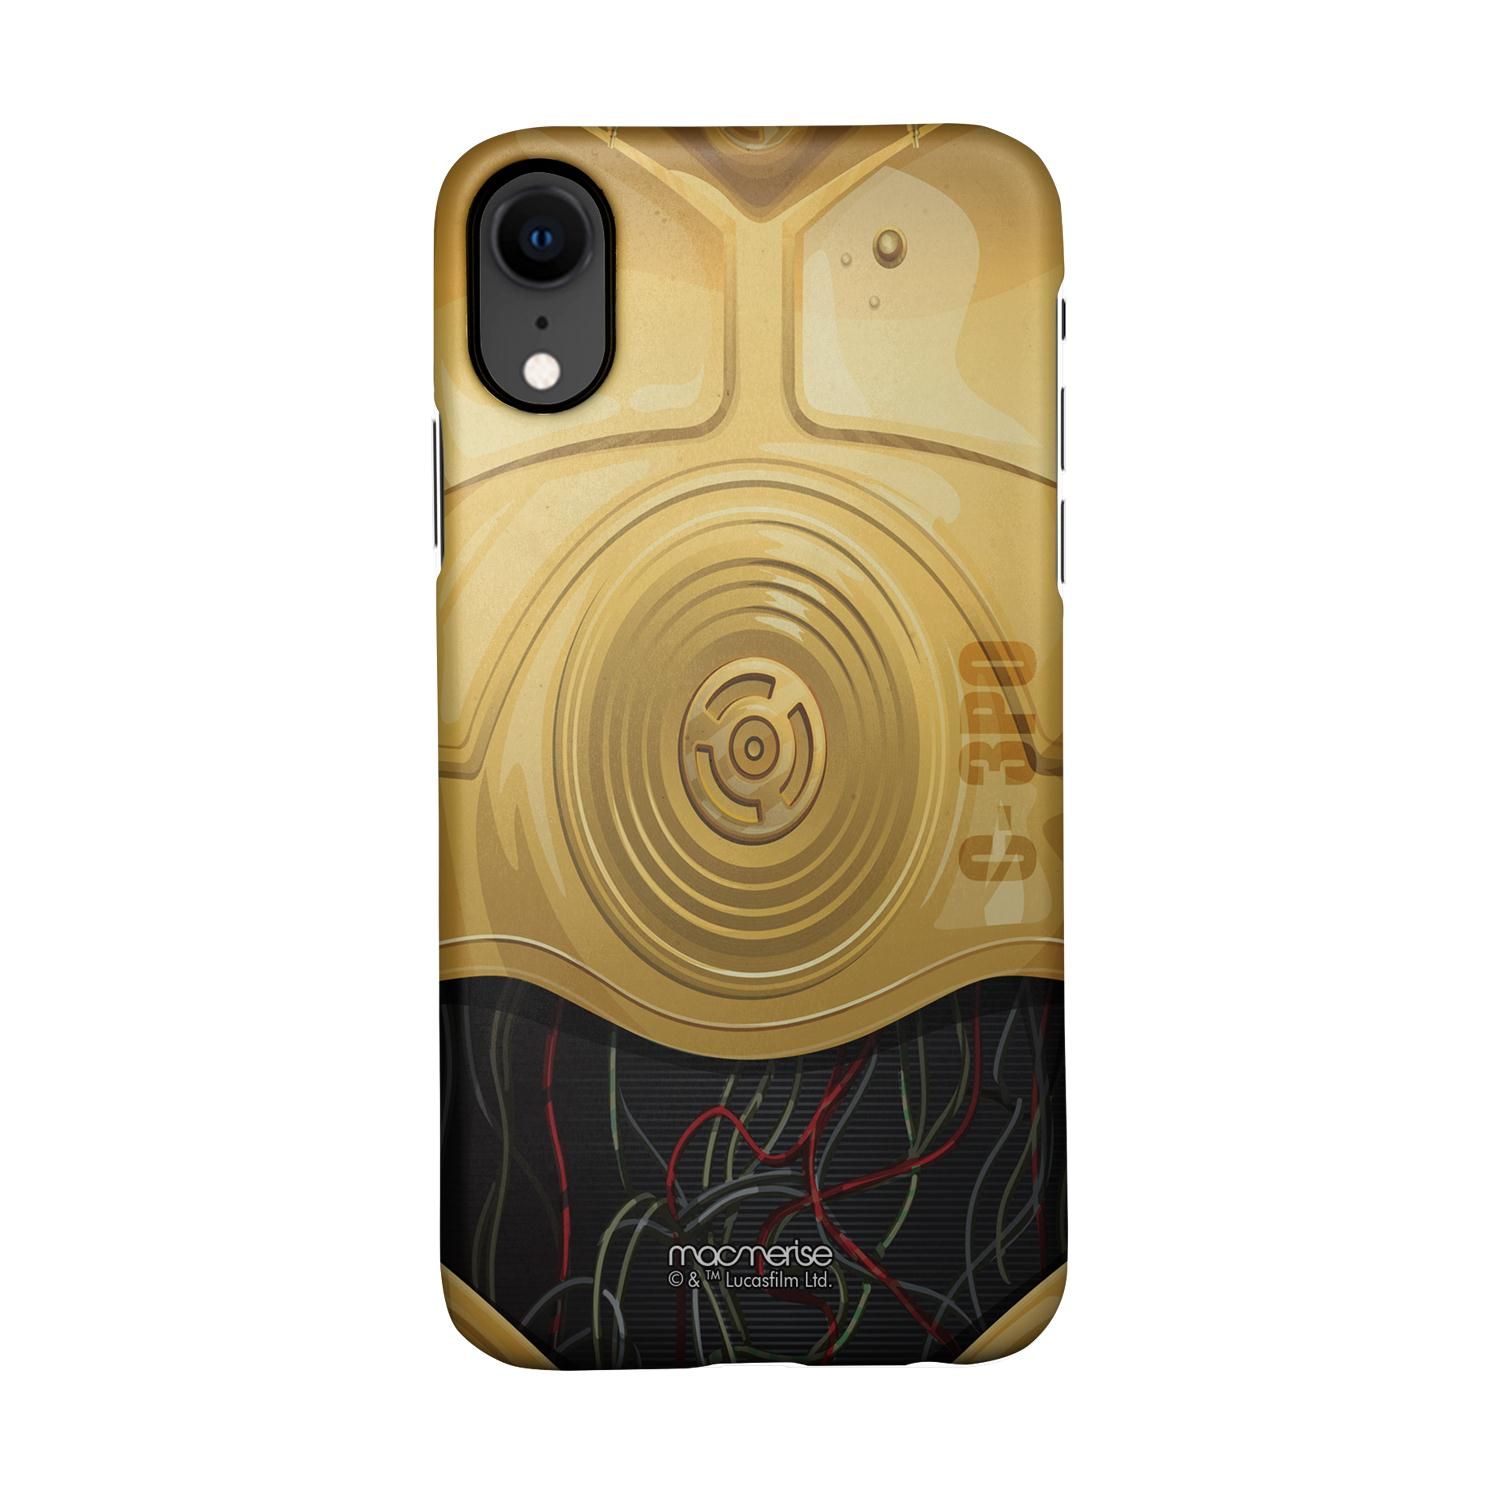 Buy Attire C3PO - Sleek Phone Case for iPhone XR Online